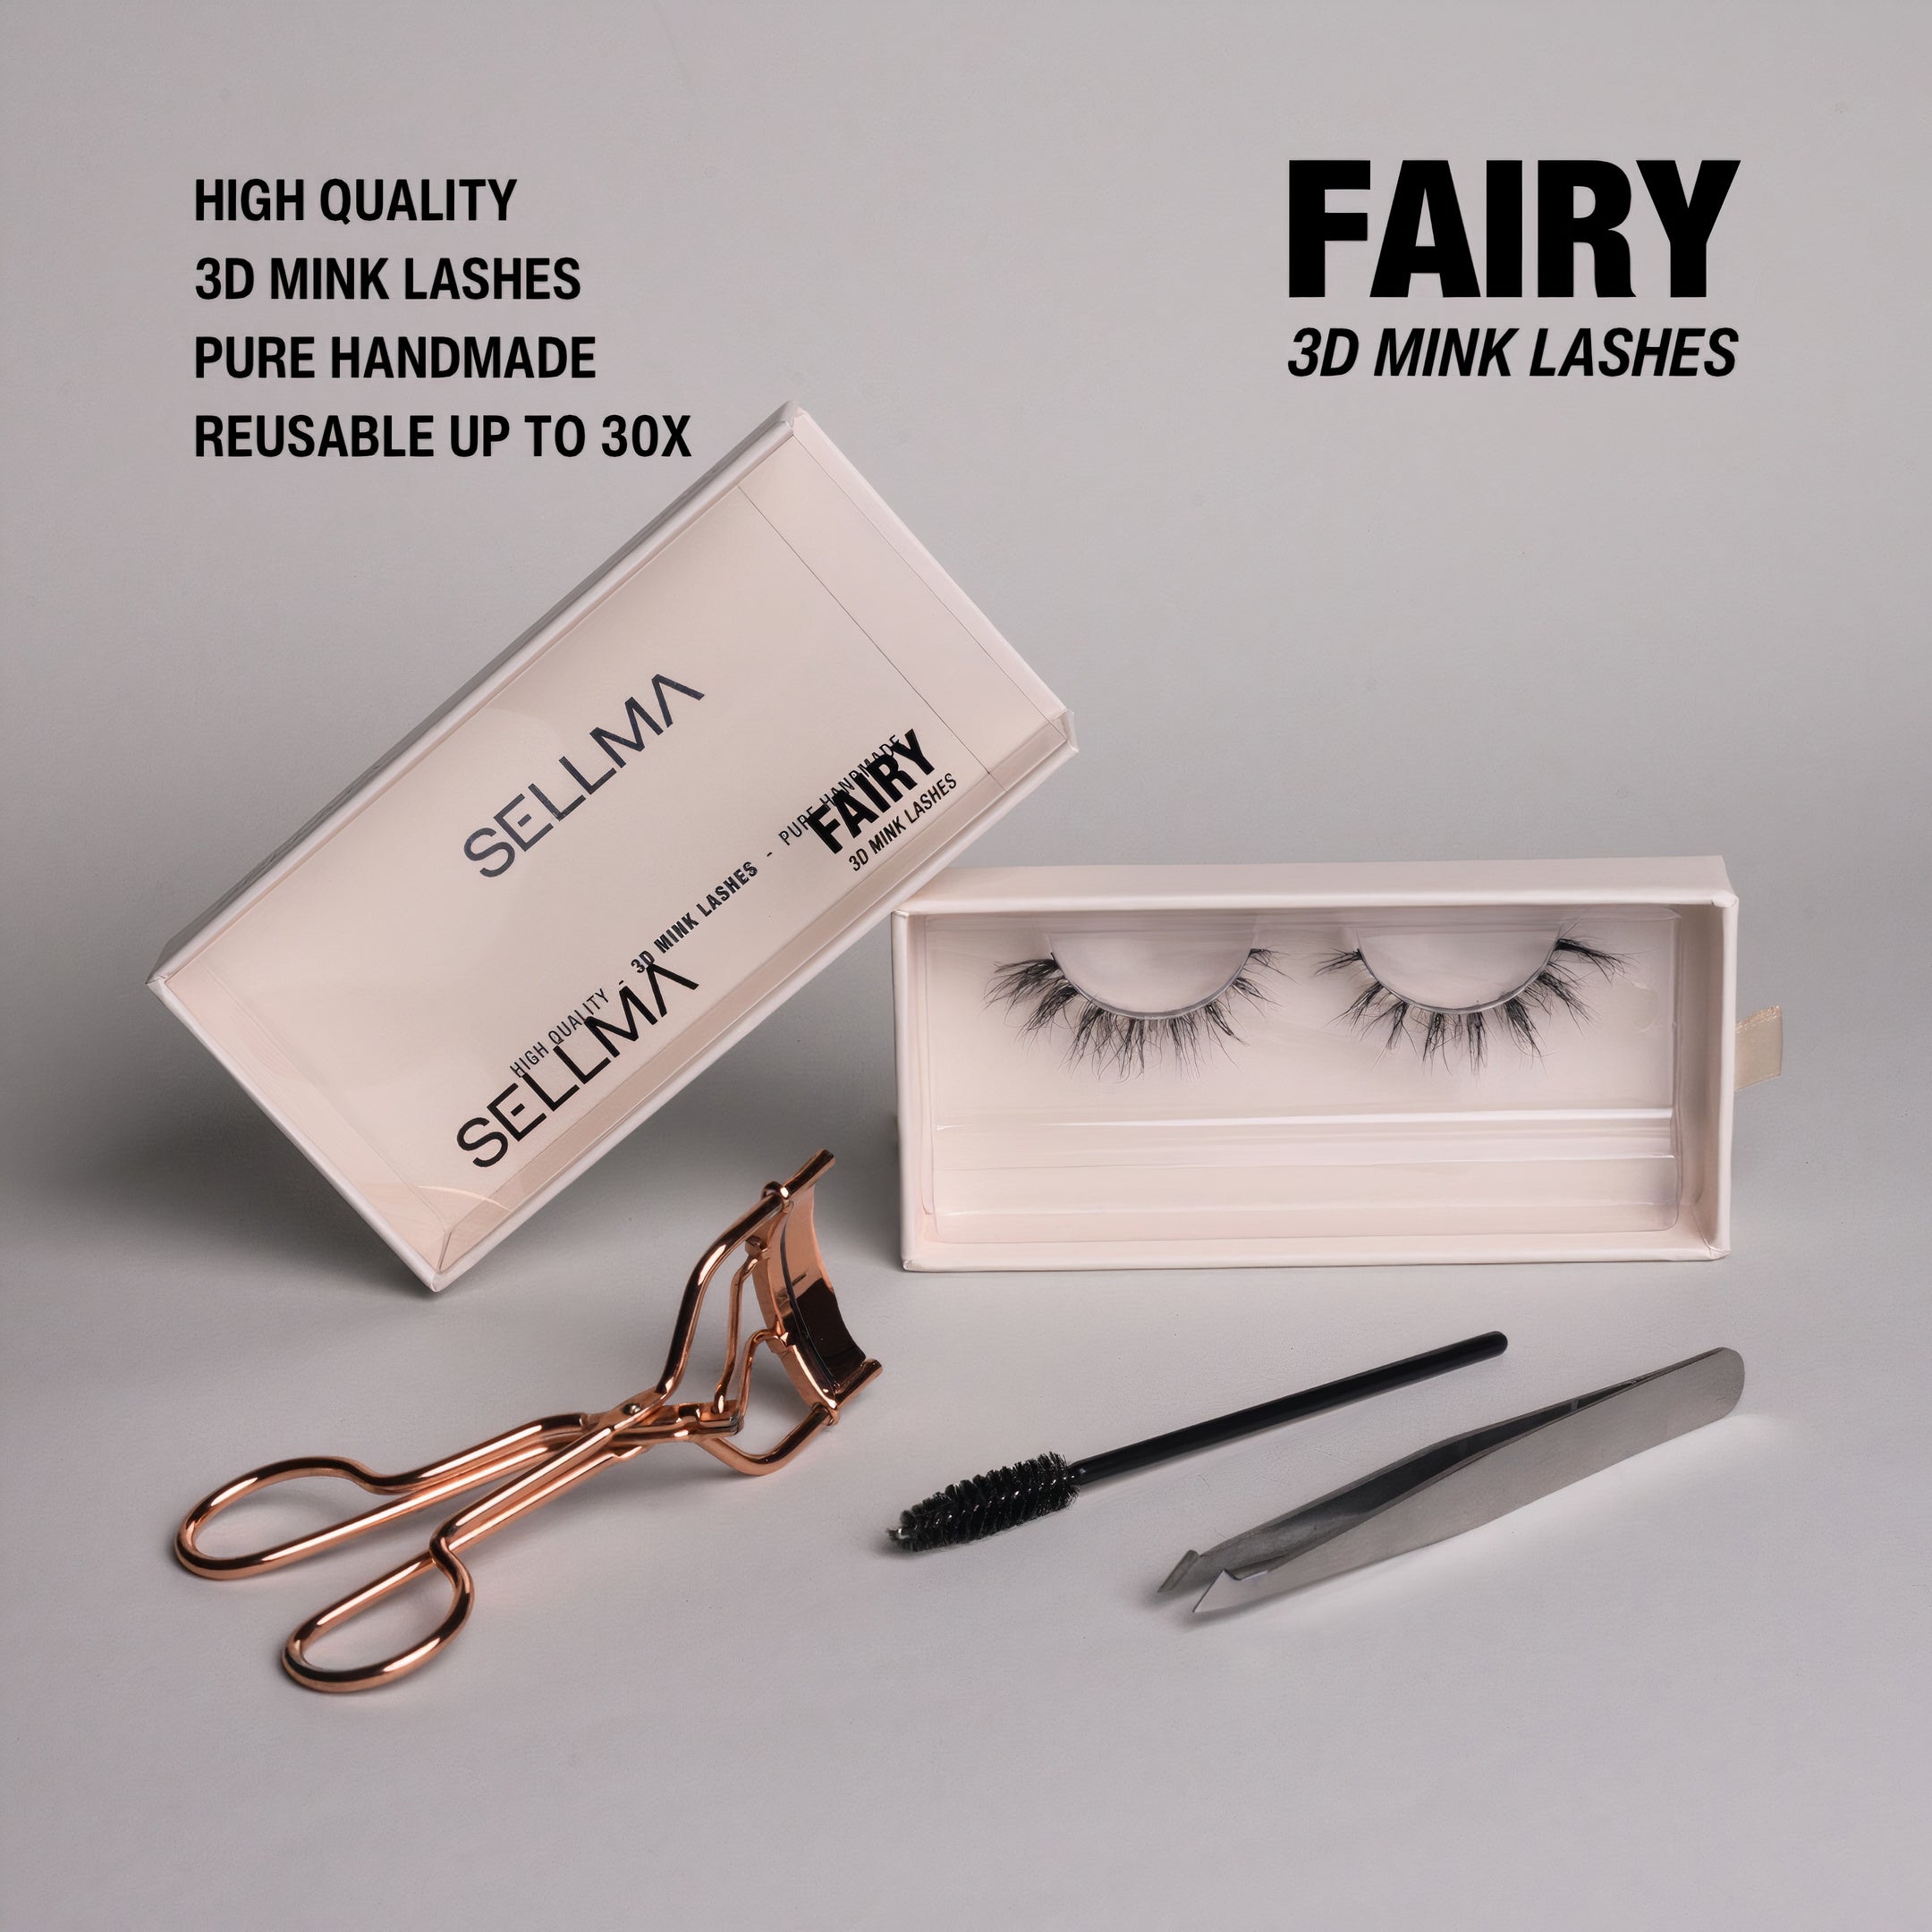 FAIRY – 3D MINK LASHES